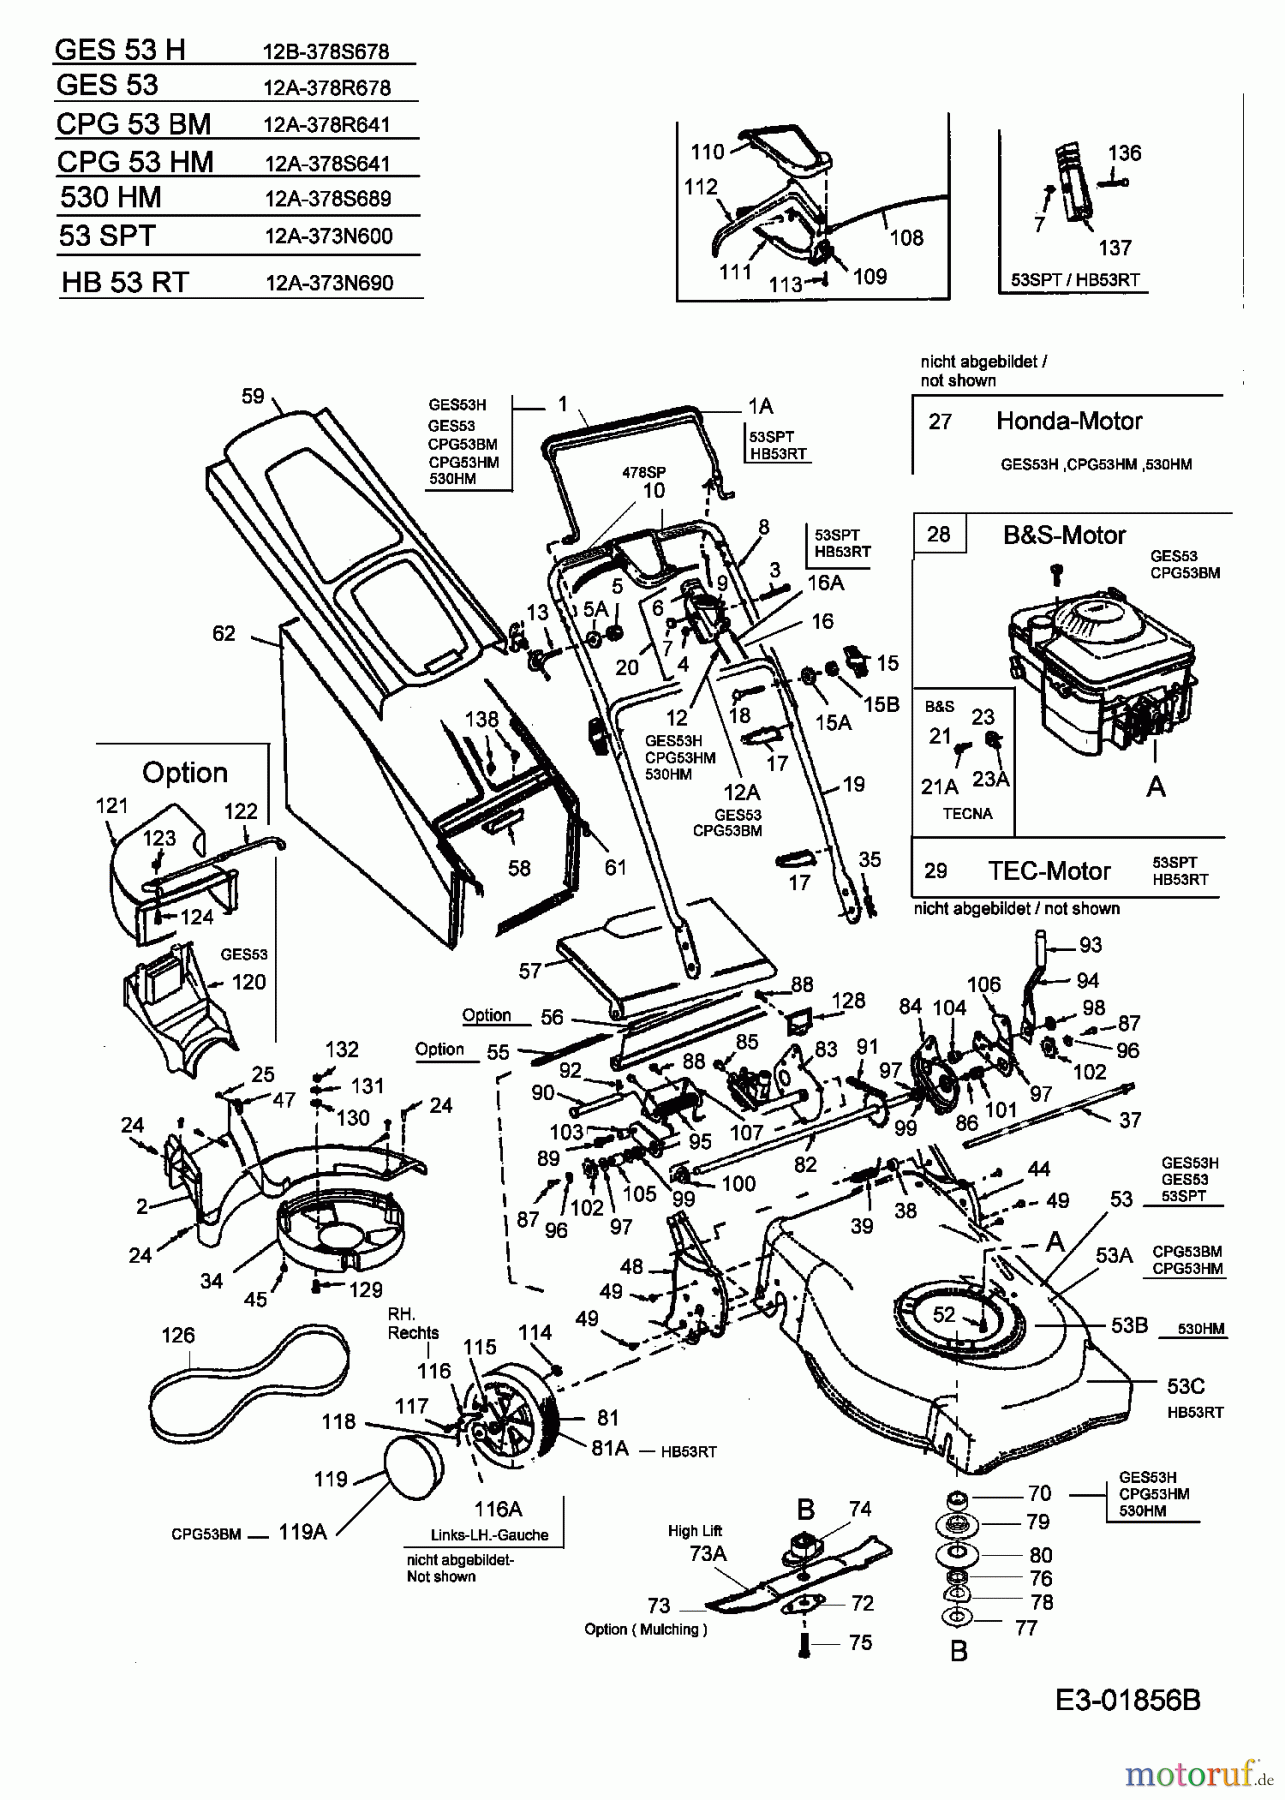  Gutbrod Motormäher mit Antrieb HB 53 RT 12A-373N690  (2004) Grundgerät